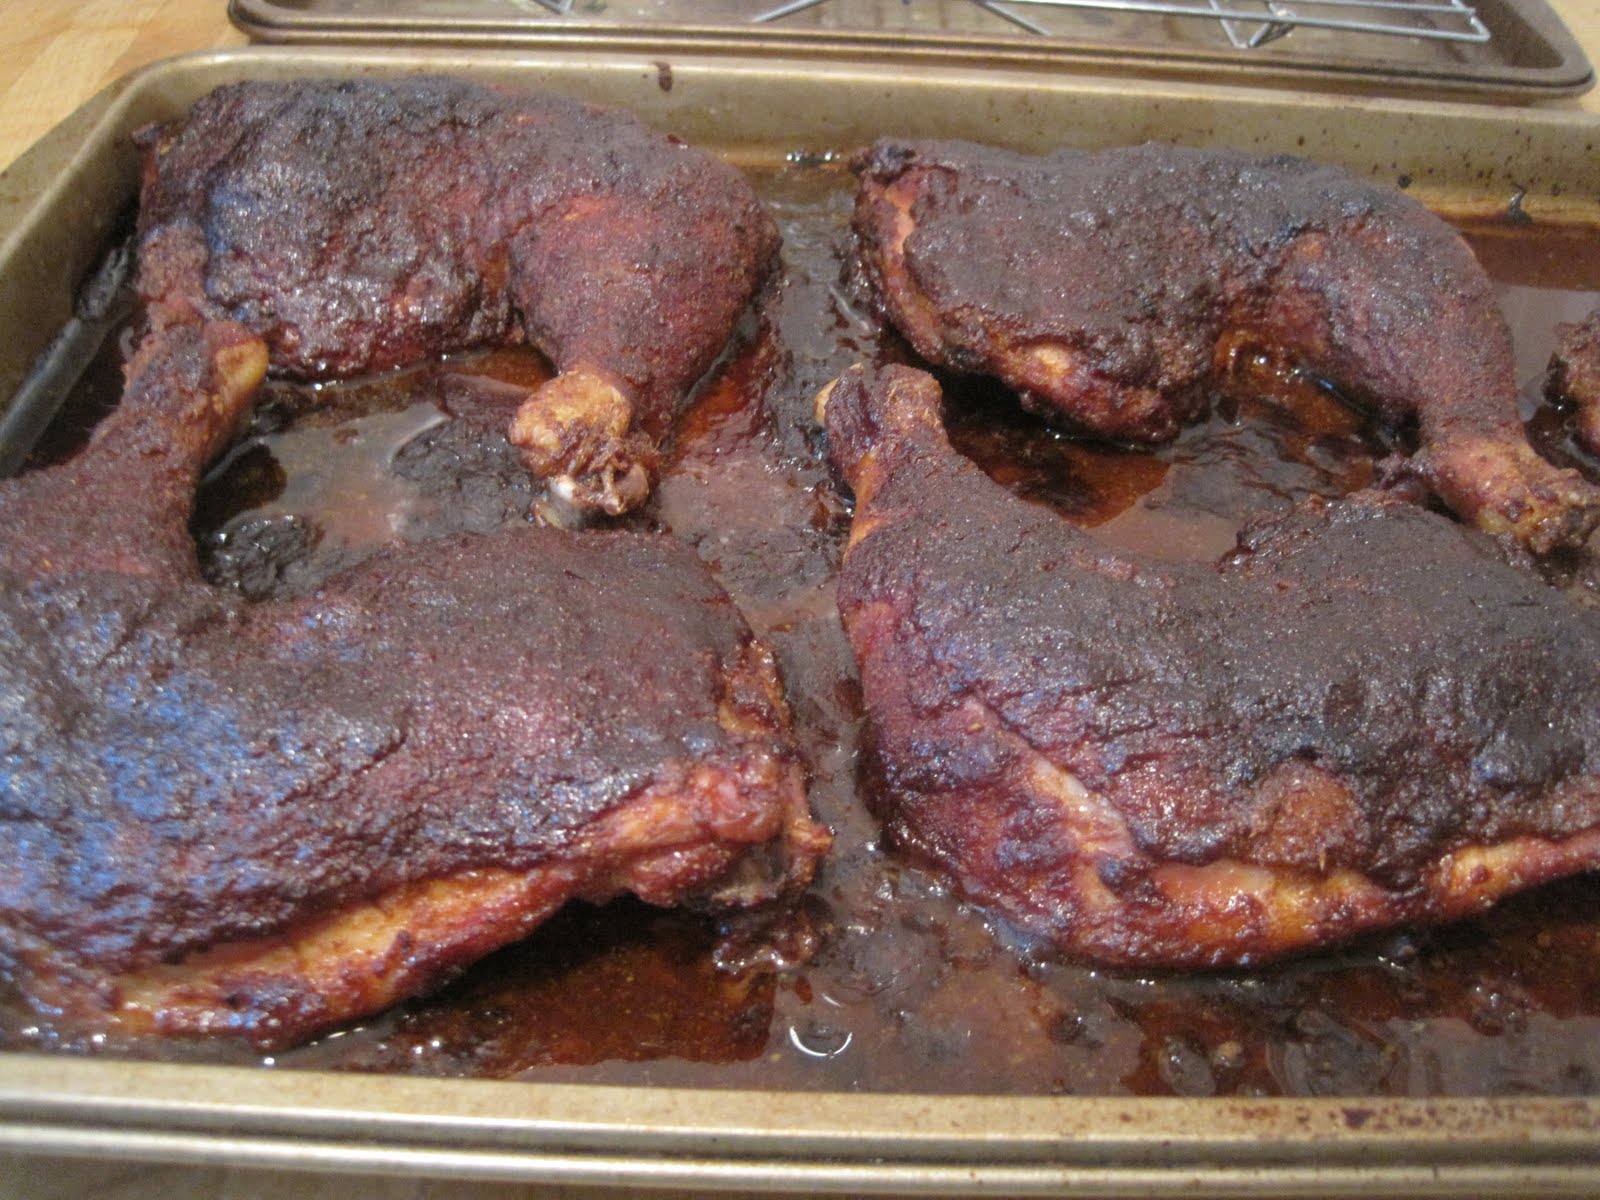 Corcoran Street Kitchen Stout Bbq Chicken In The Oven regarding roasted chicken 300 degrees regarding Property